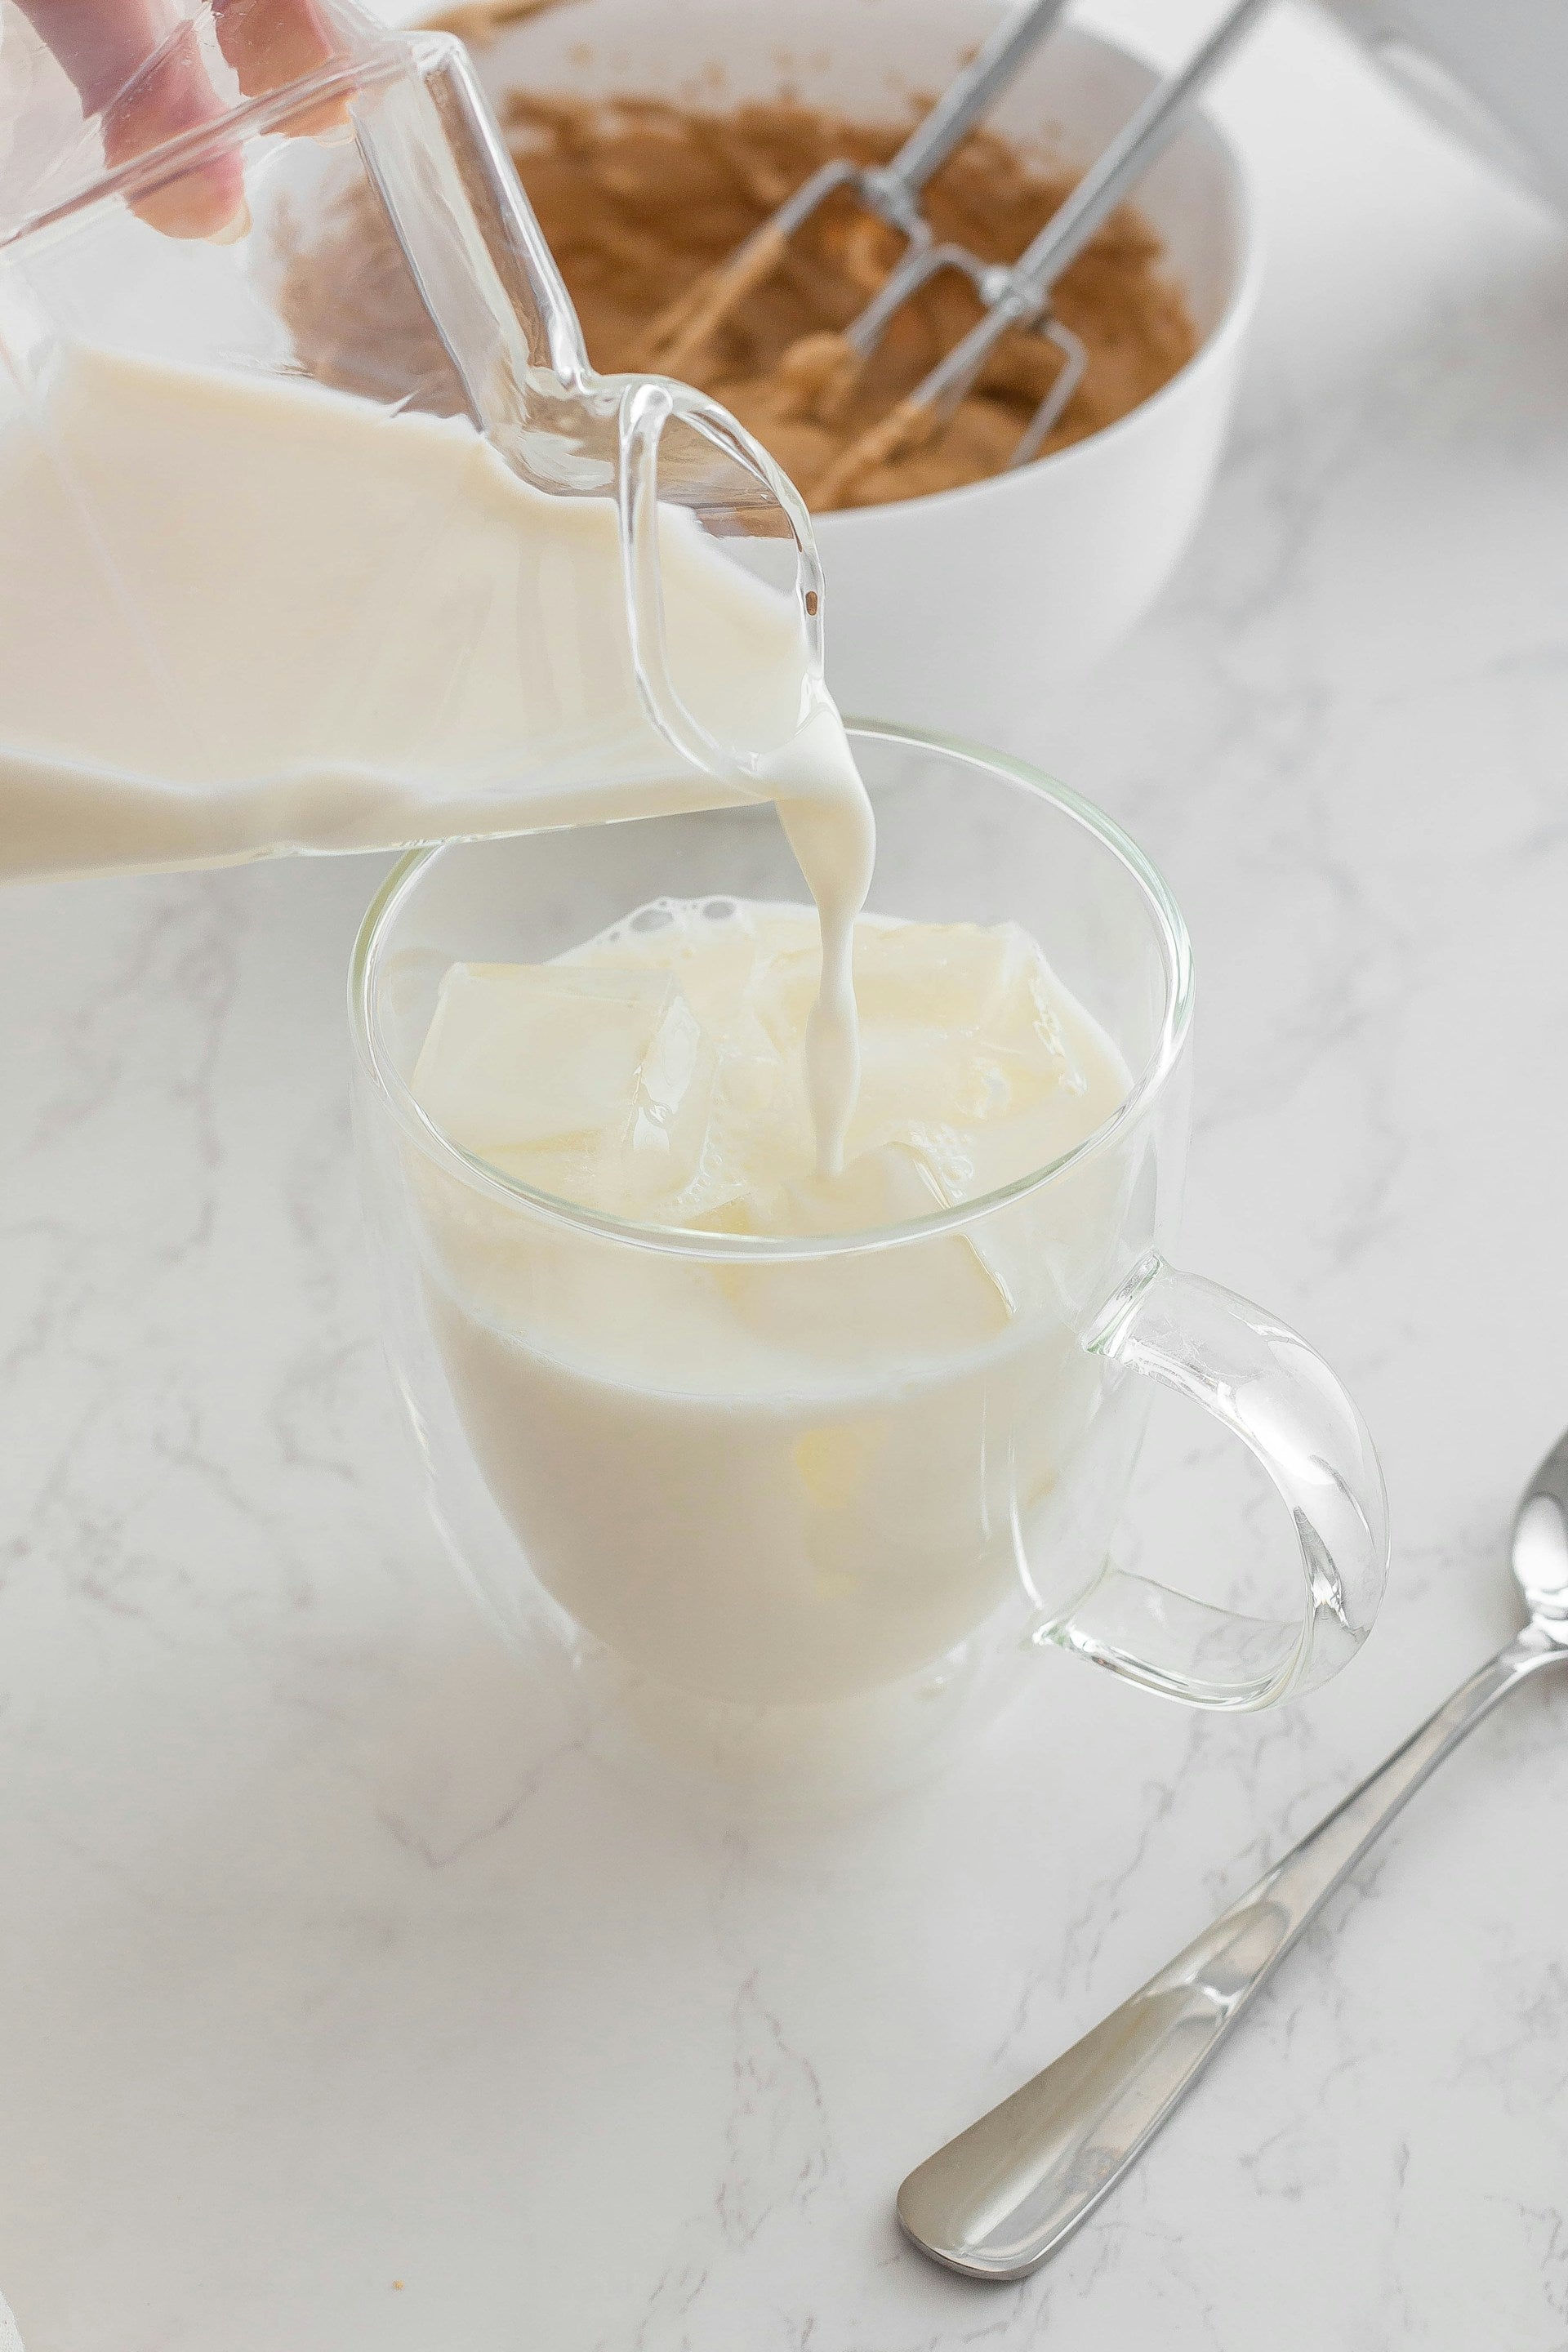 How Long Can Raw Milk Stay In The Fridge? | Fridge.com